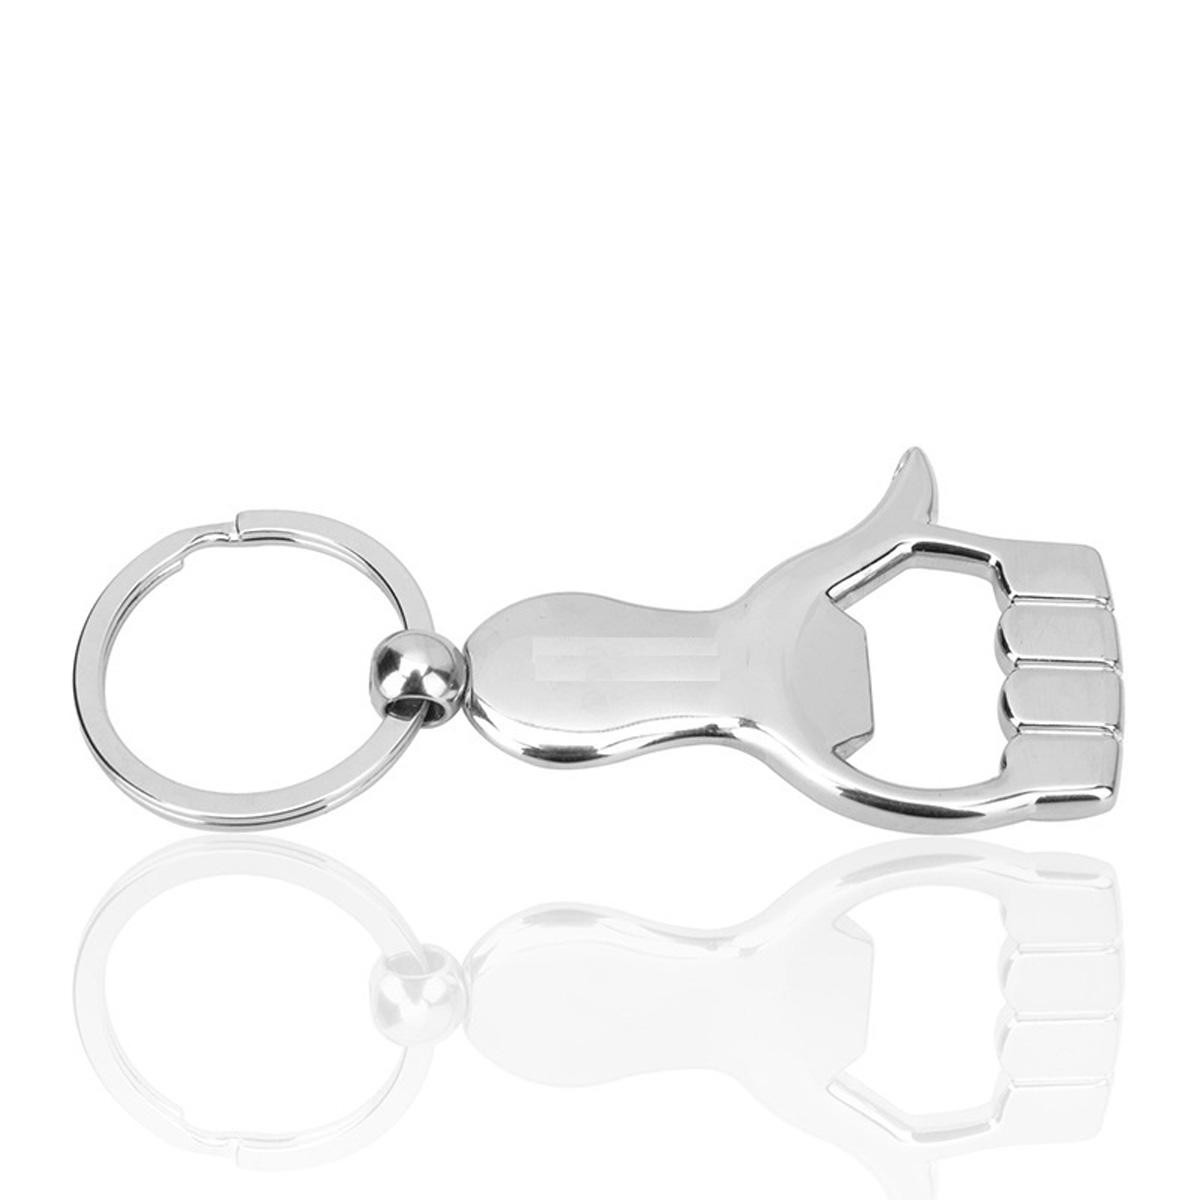 GL-MEZ1096 Hand-shaped Keychain Bottle Opener